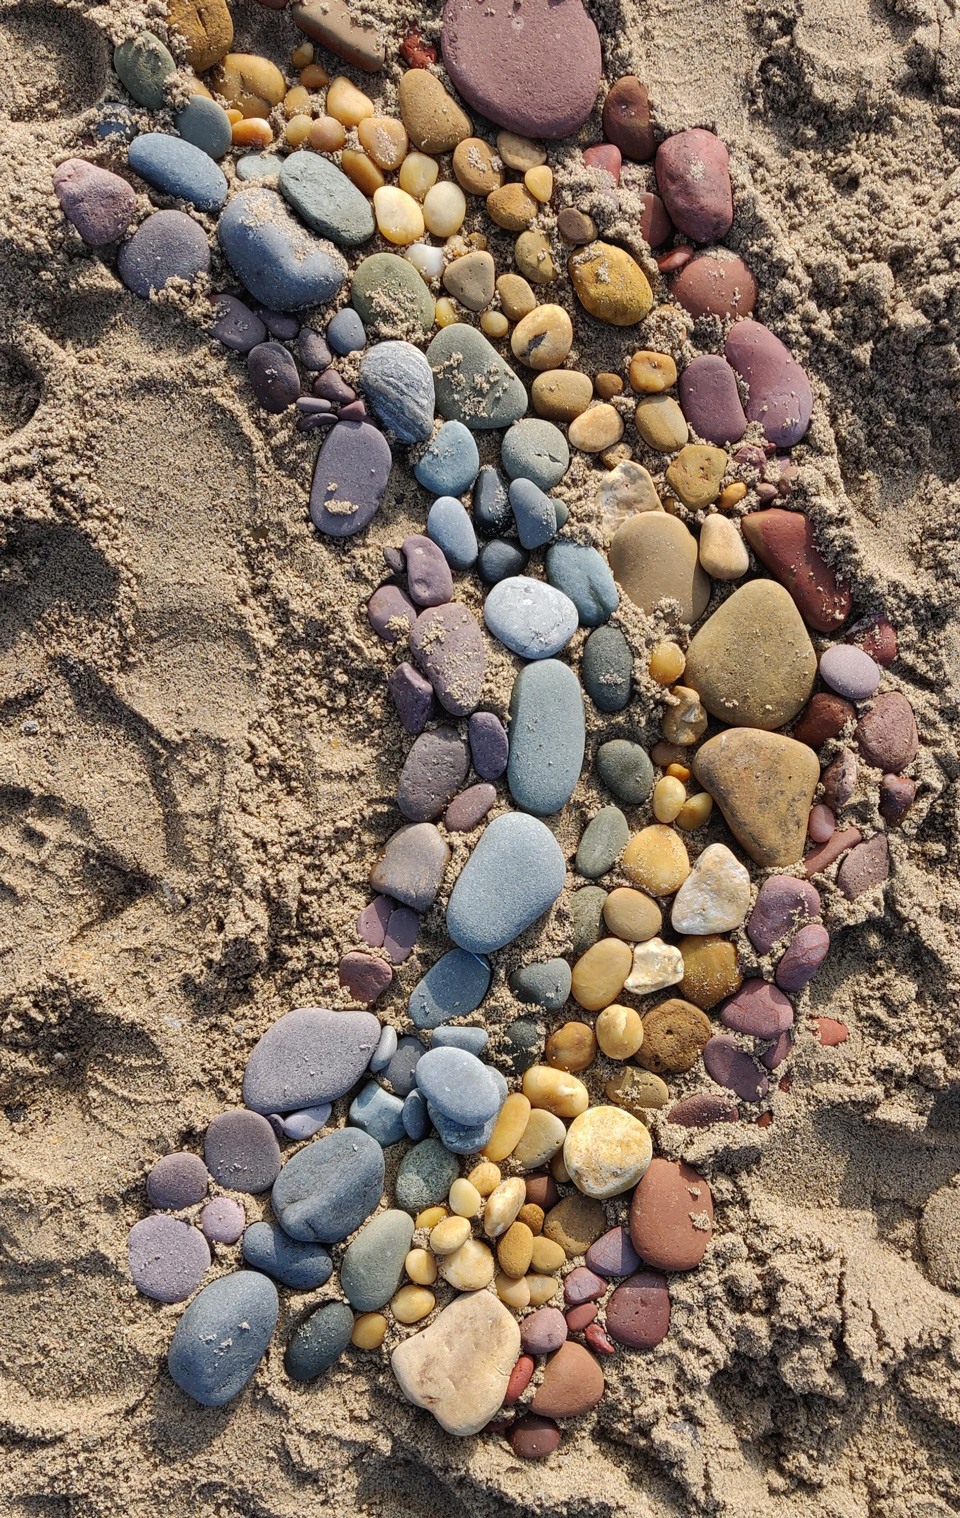 قوس قزح بالصخور في شاطئ